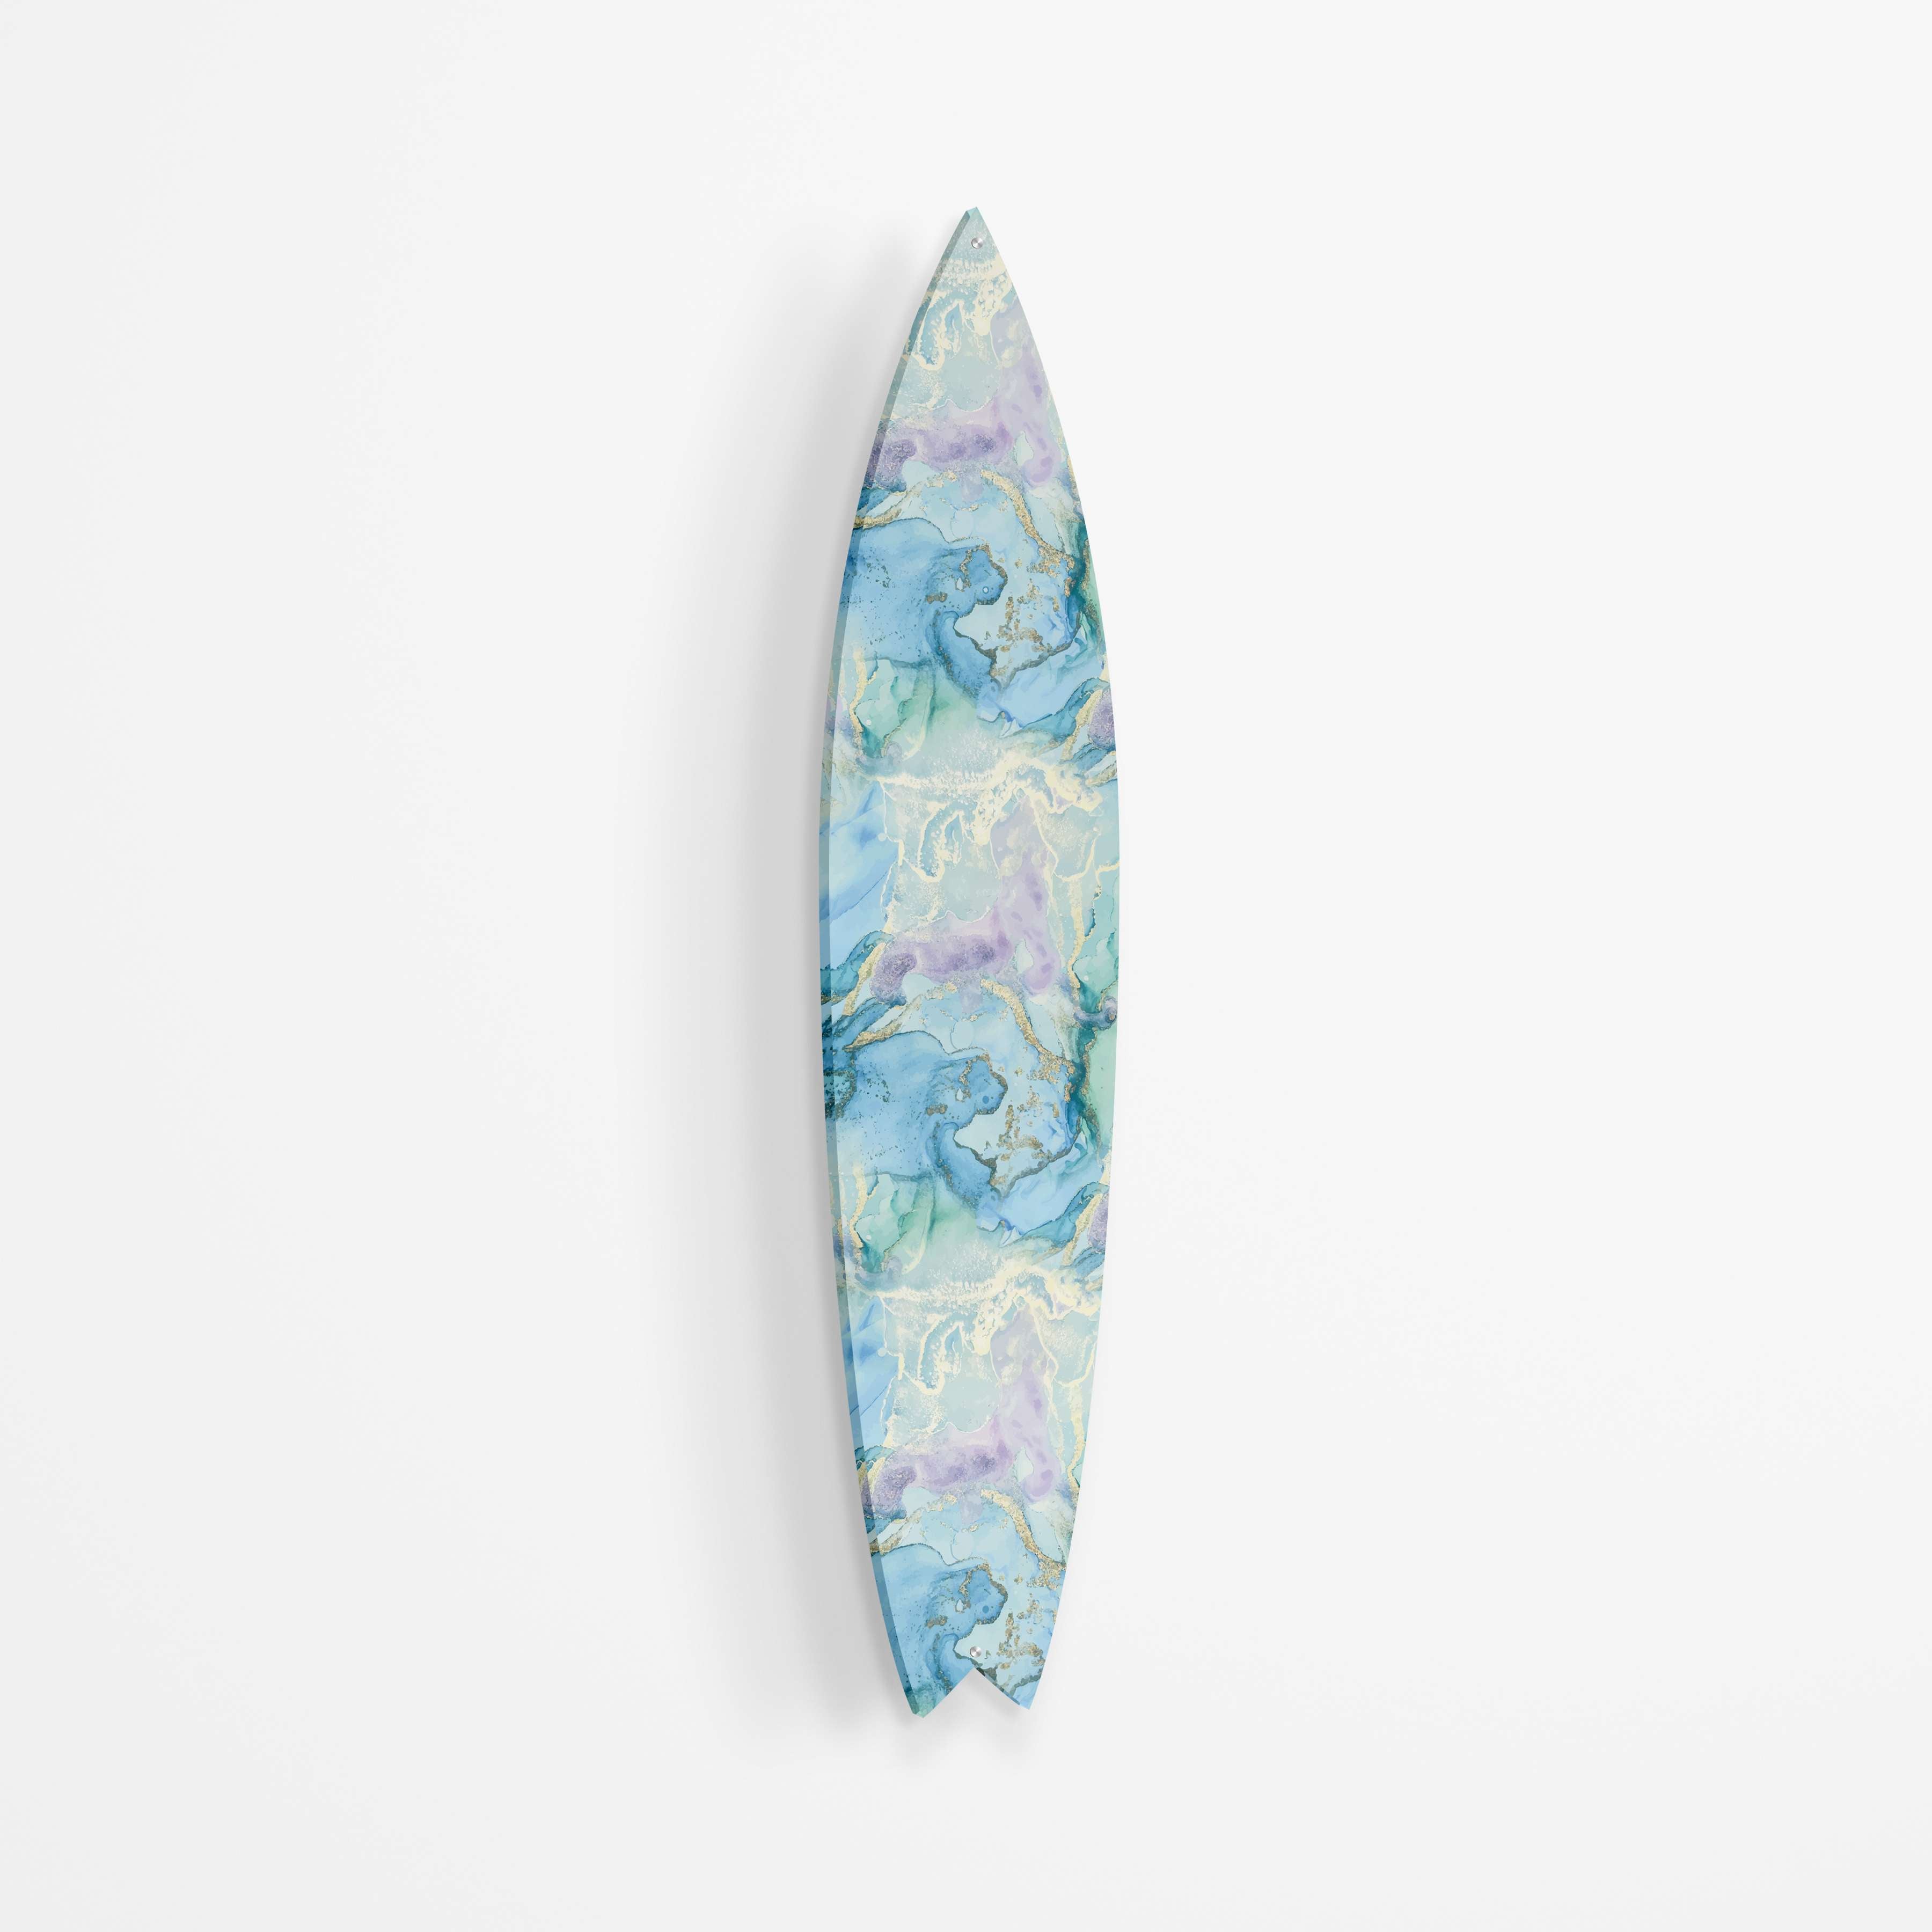 New York! surfboard wall art – Artyte